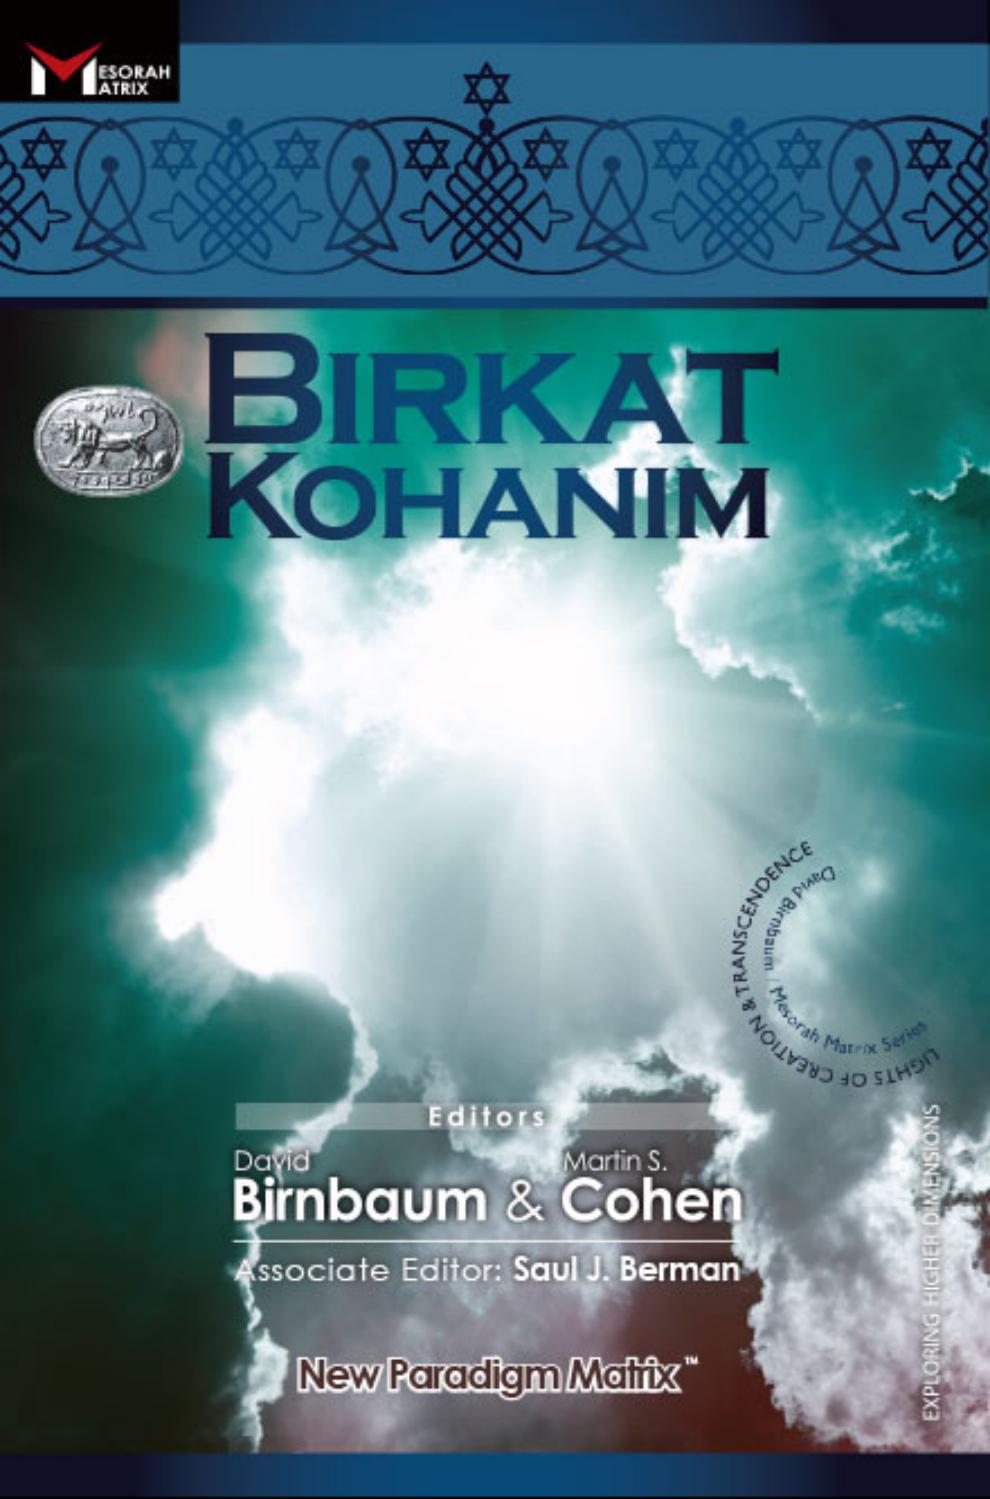 Birkat Kohanim - the Priests’ Blessing